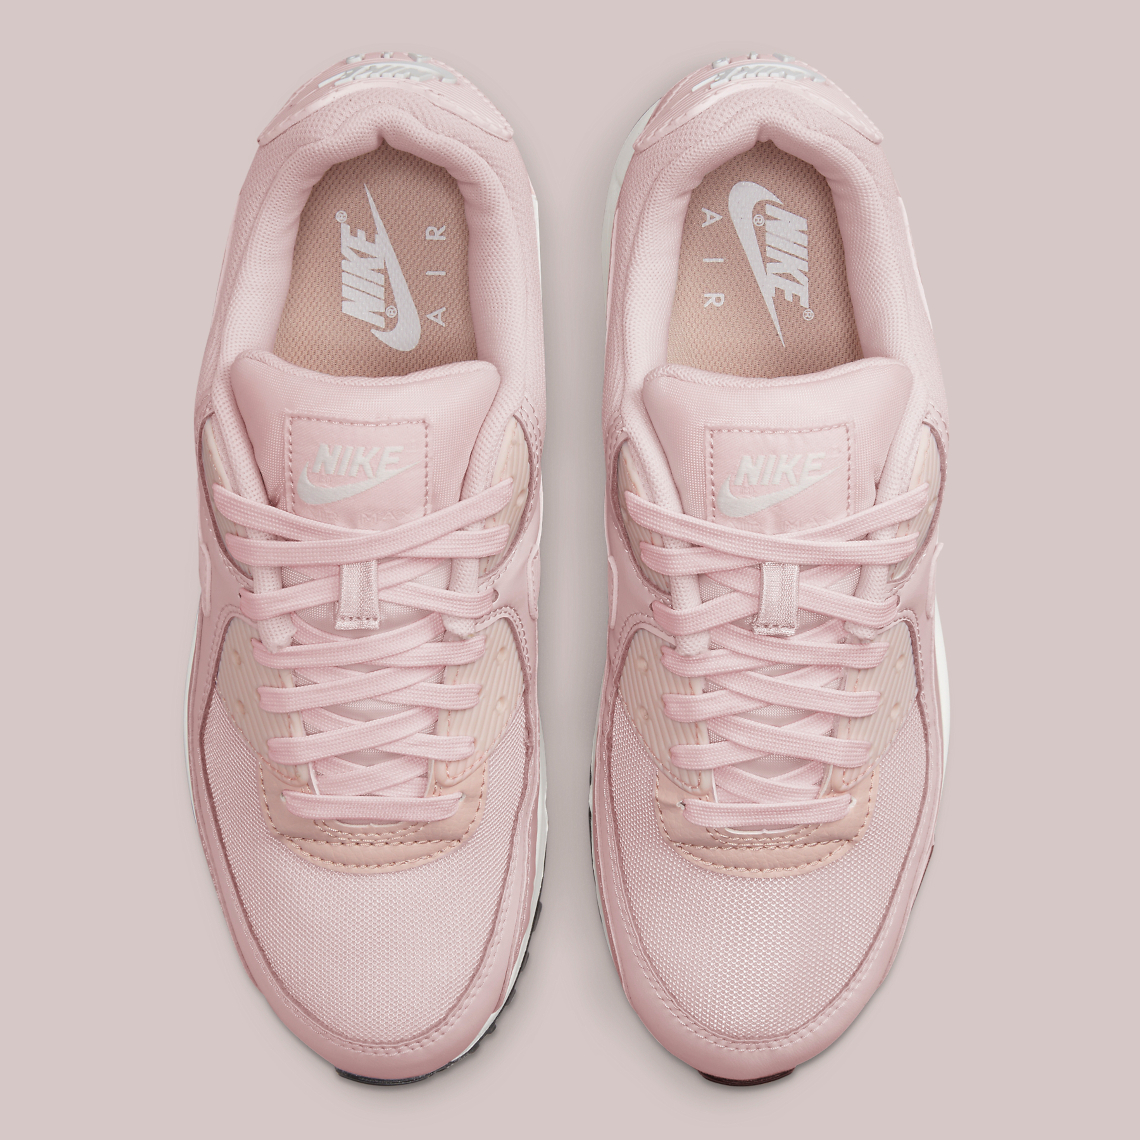 Nike Air pink air max Max 90 "Pink" DH8010-600 Release Date | SneakerNews.com